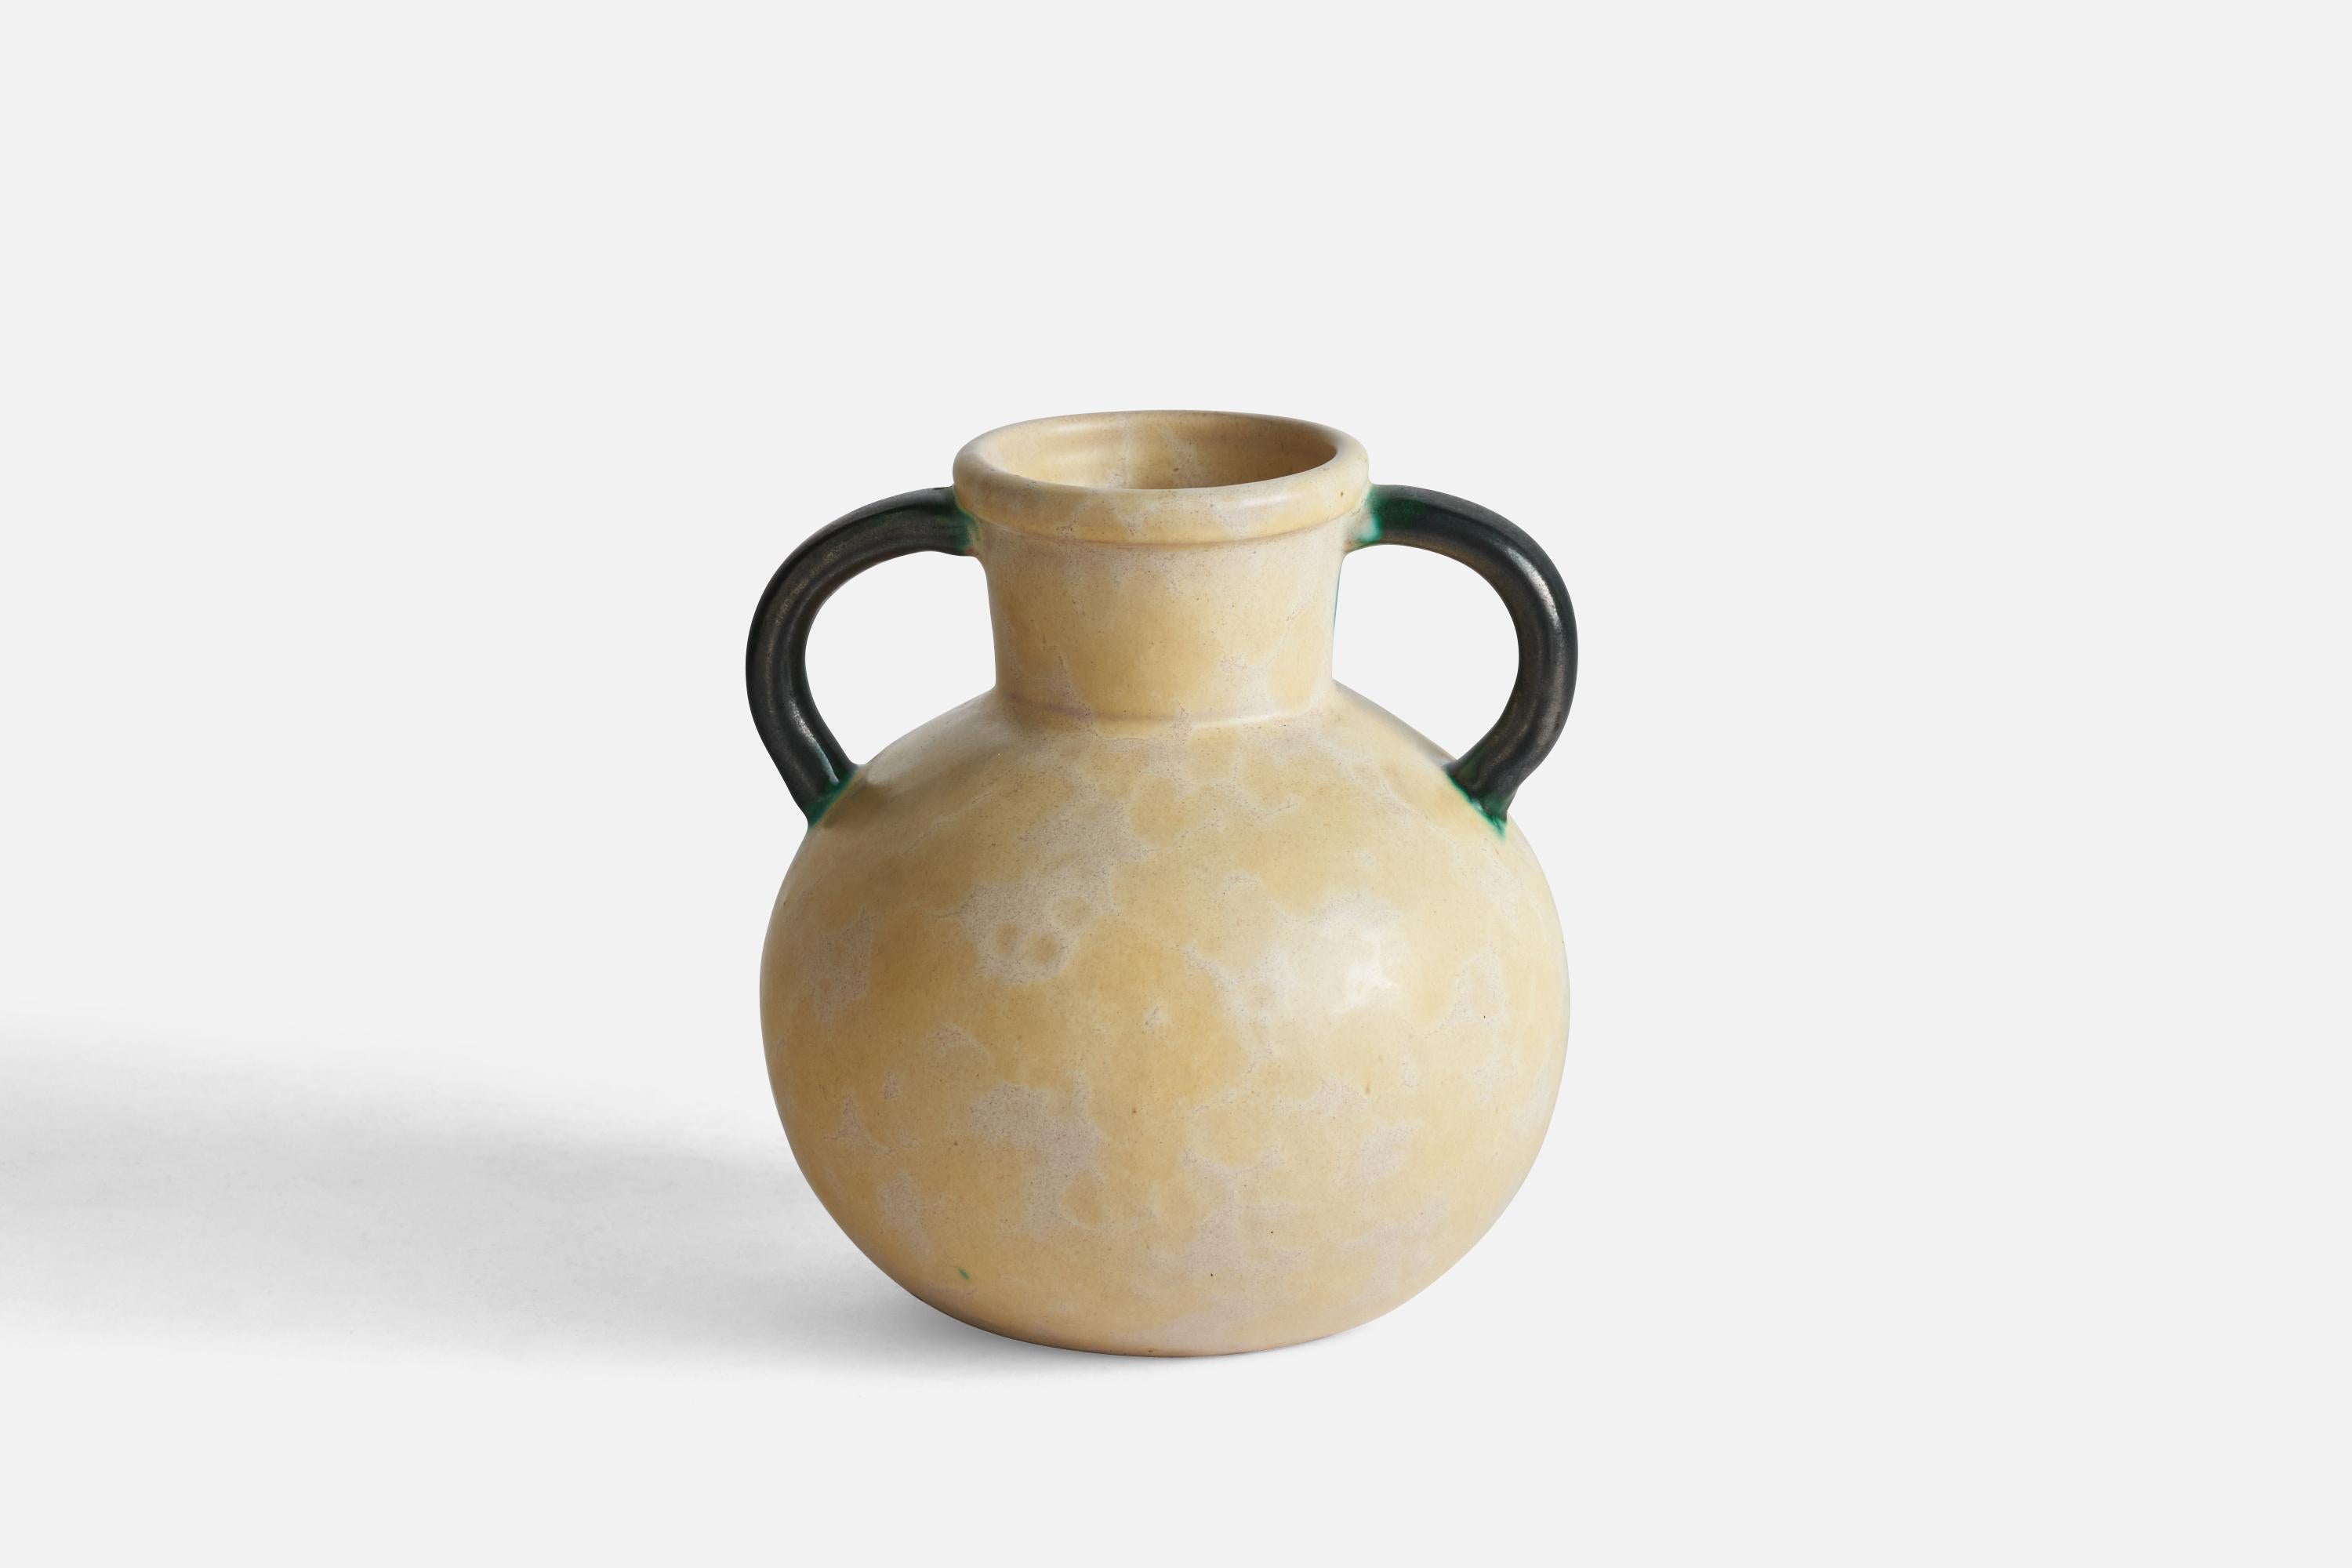 A beige and black-glazed earthenware vase designed and produced by Upsala Ekeby, Sweden, 1930s.